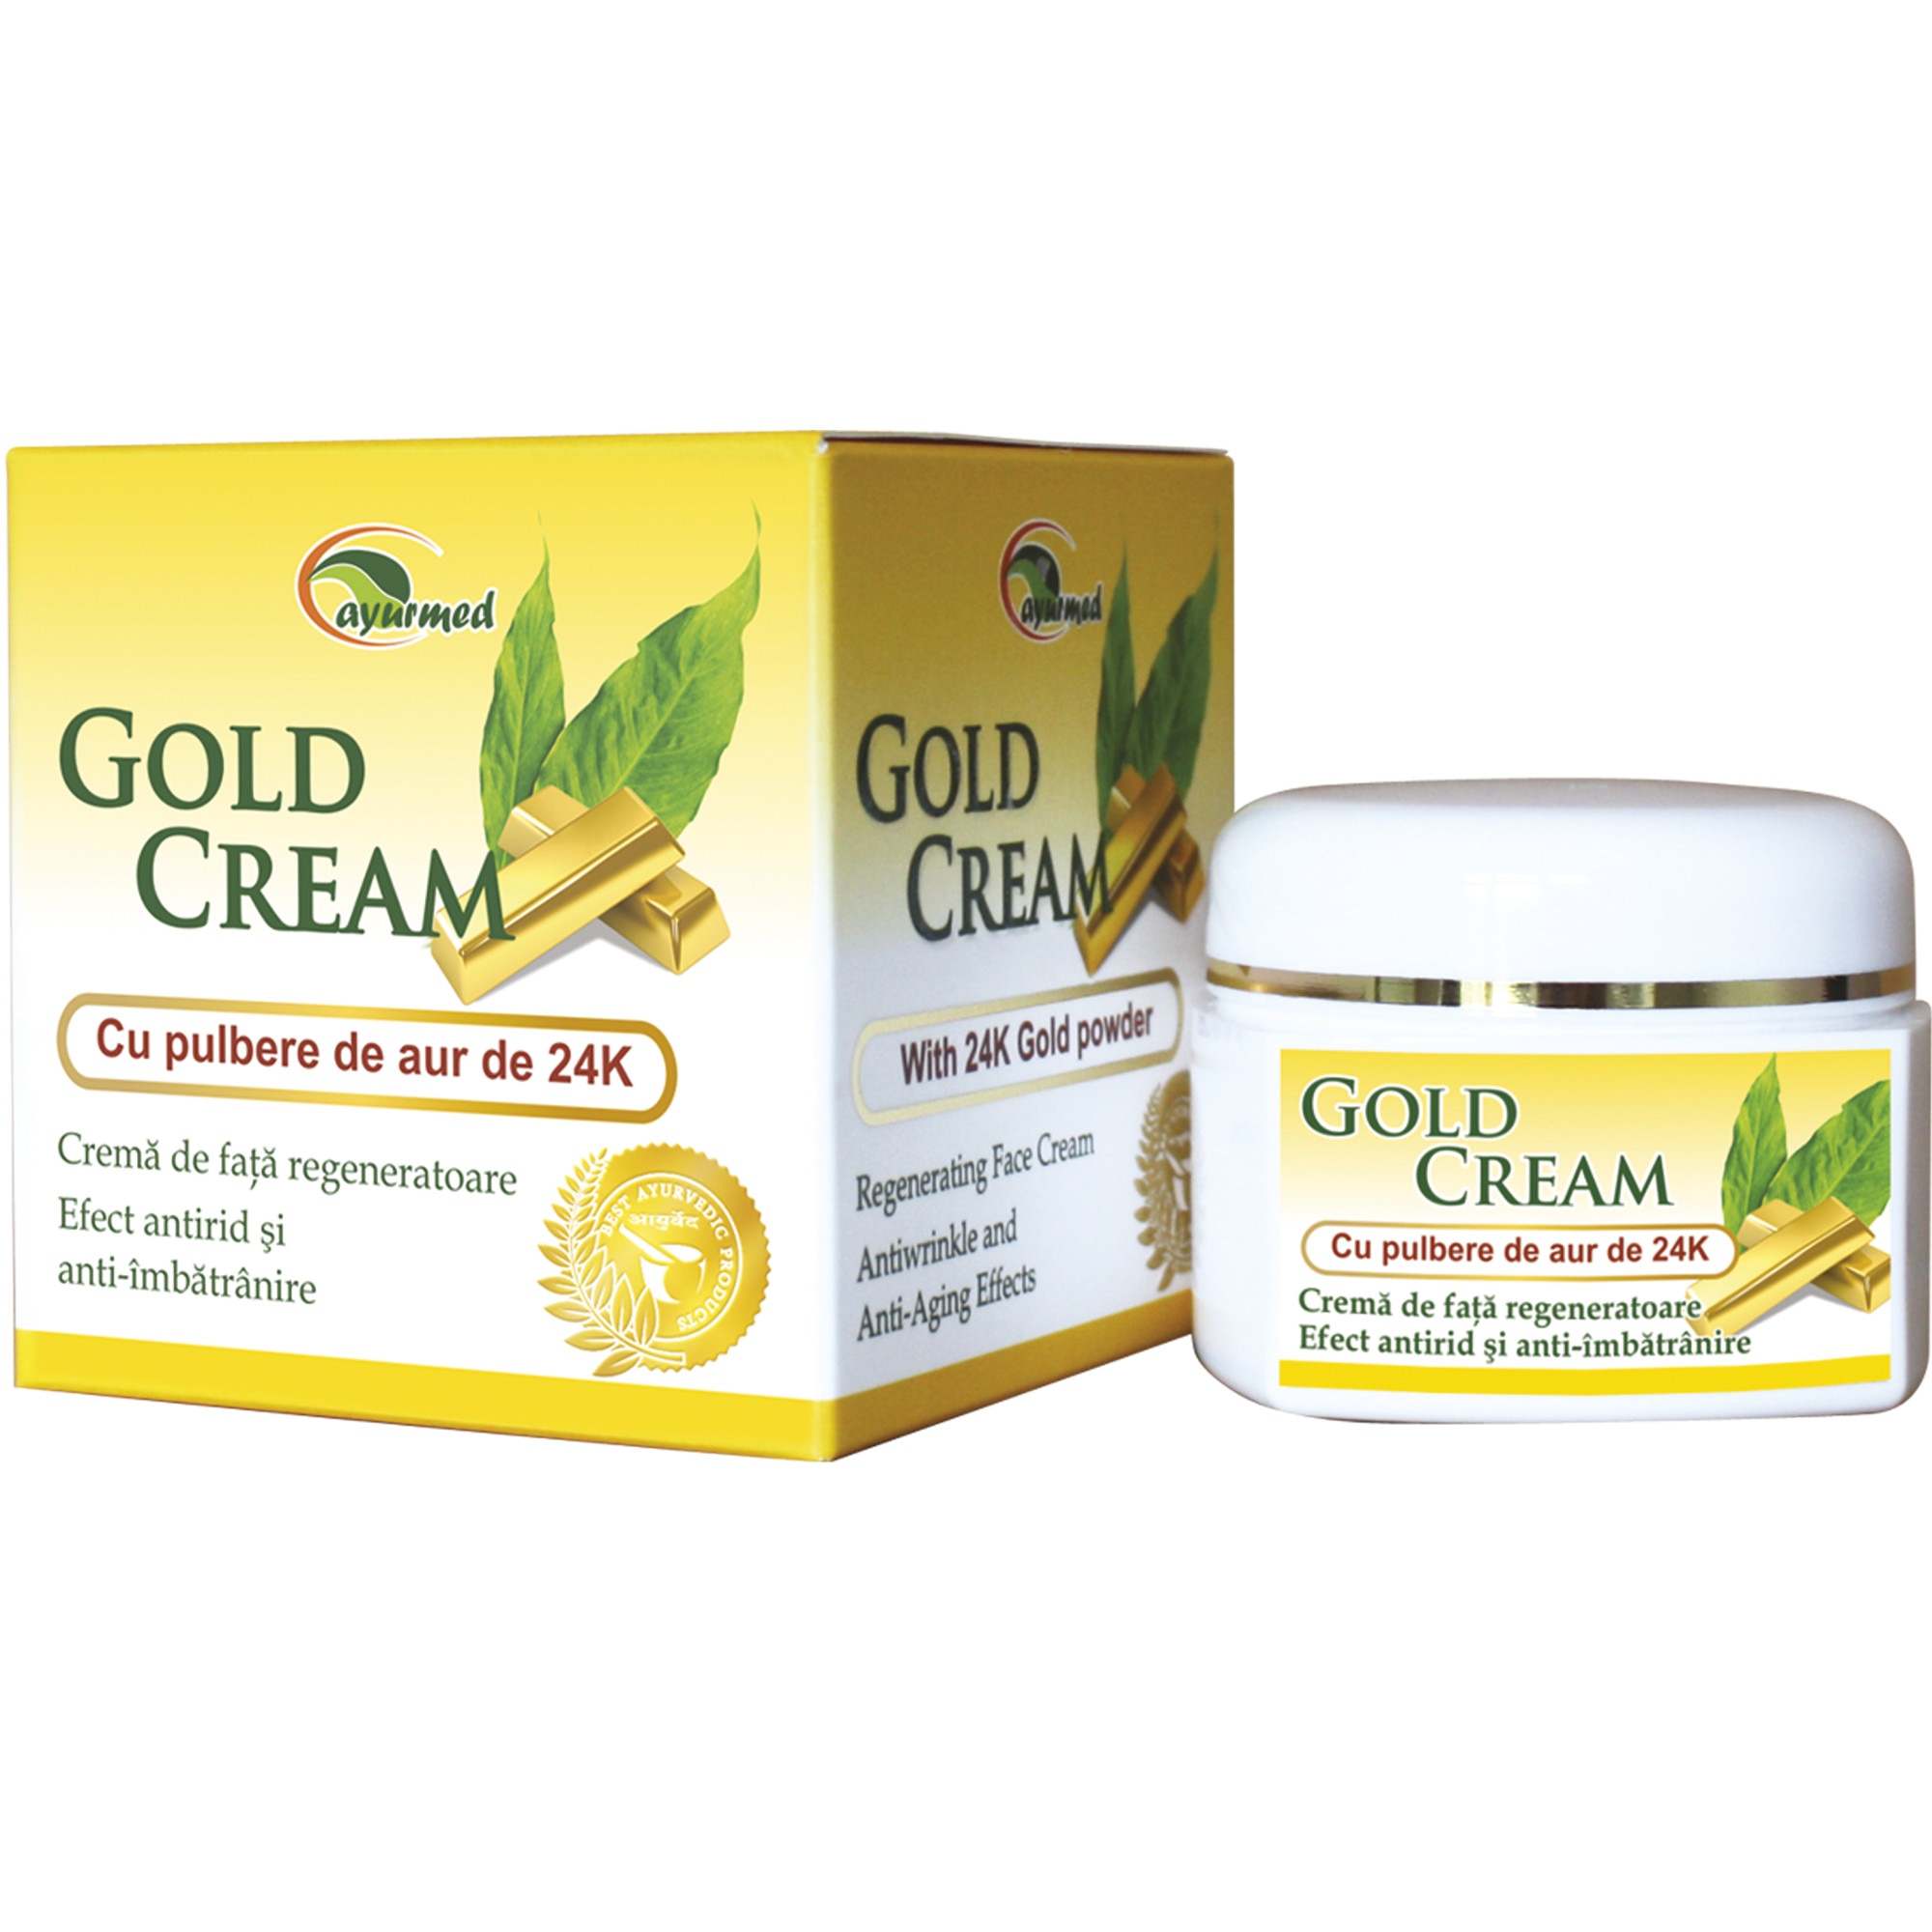 Gold Cream - Ayurmed | Eherbal